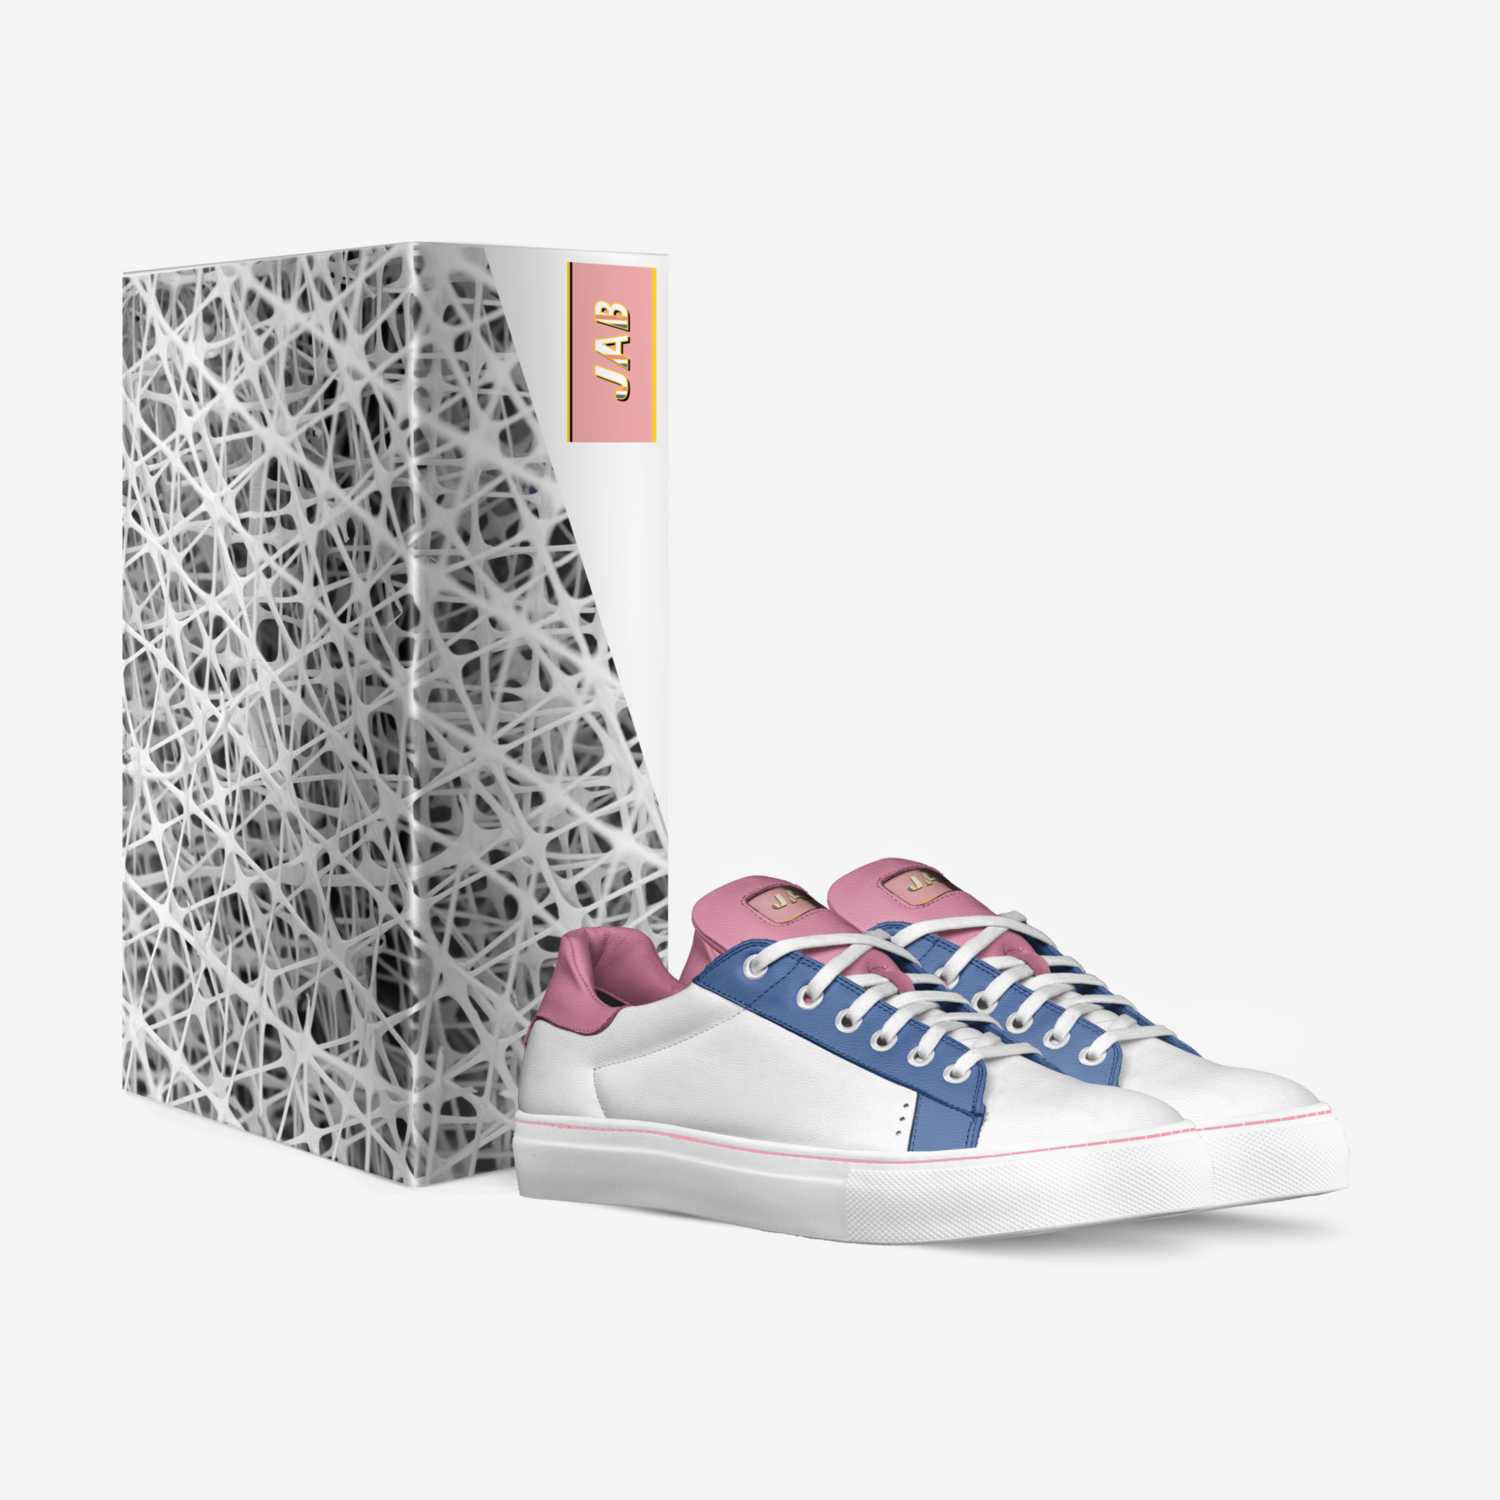 Flex 1 custom made in Italy shoes by Jon Berryman | Box view